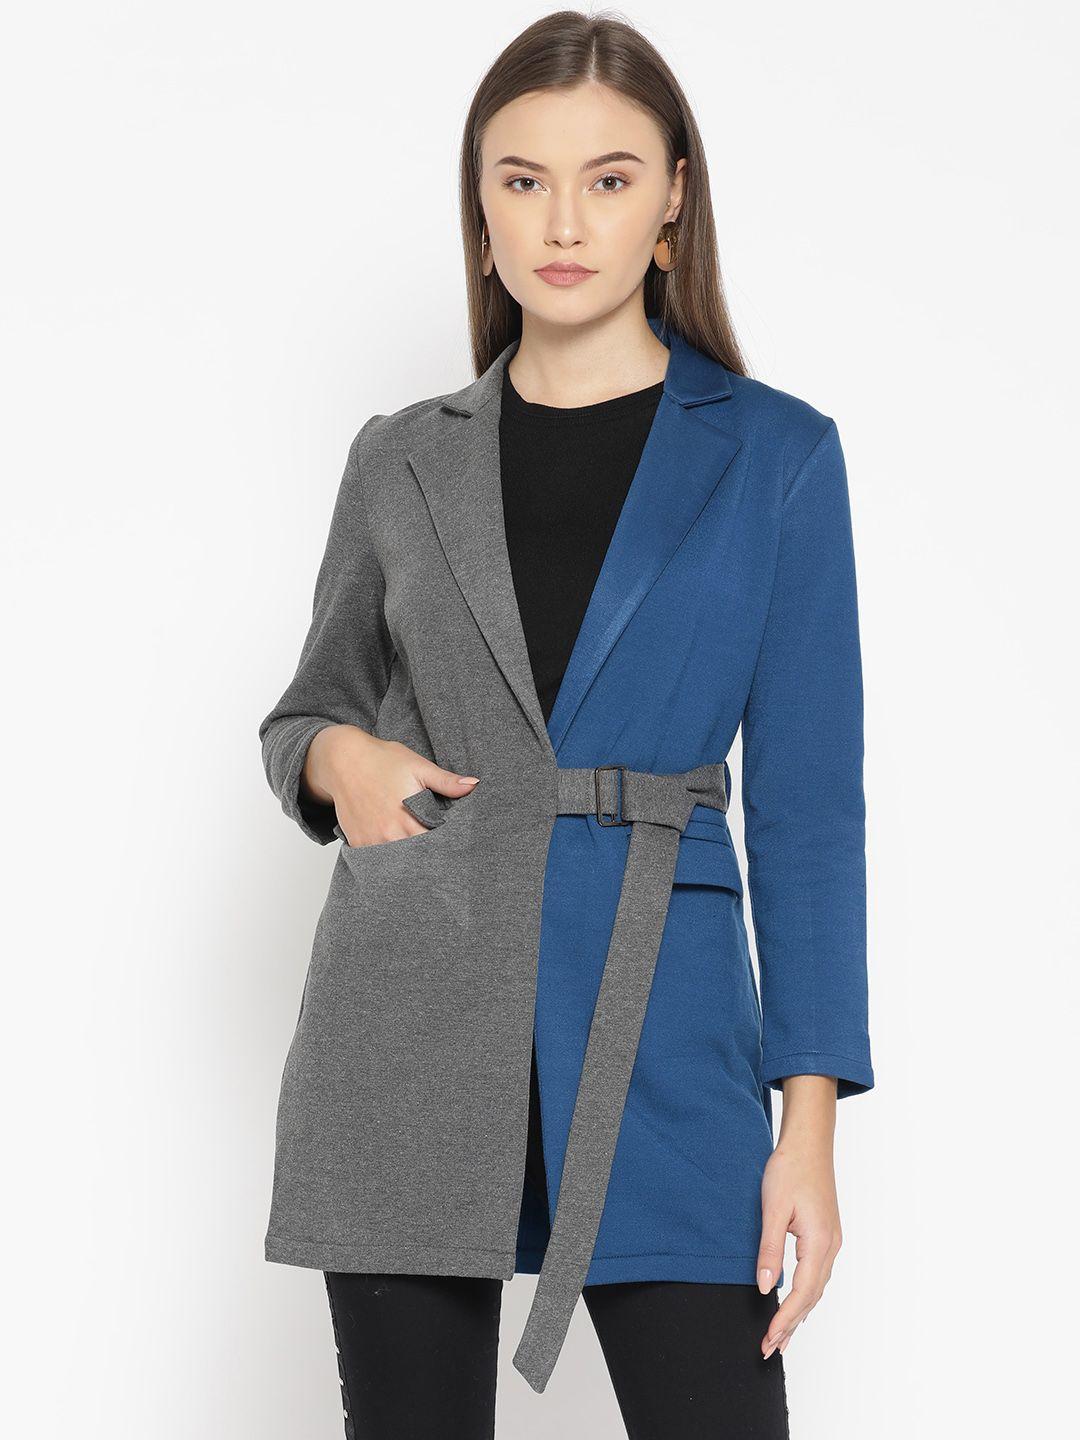 dodo & moa women charcoal grey & blue colourblocked open-front blazer